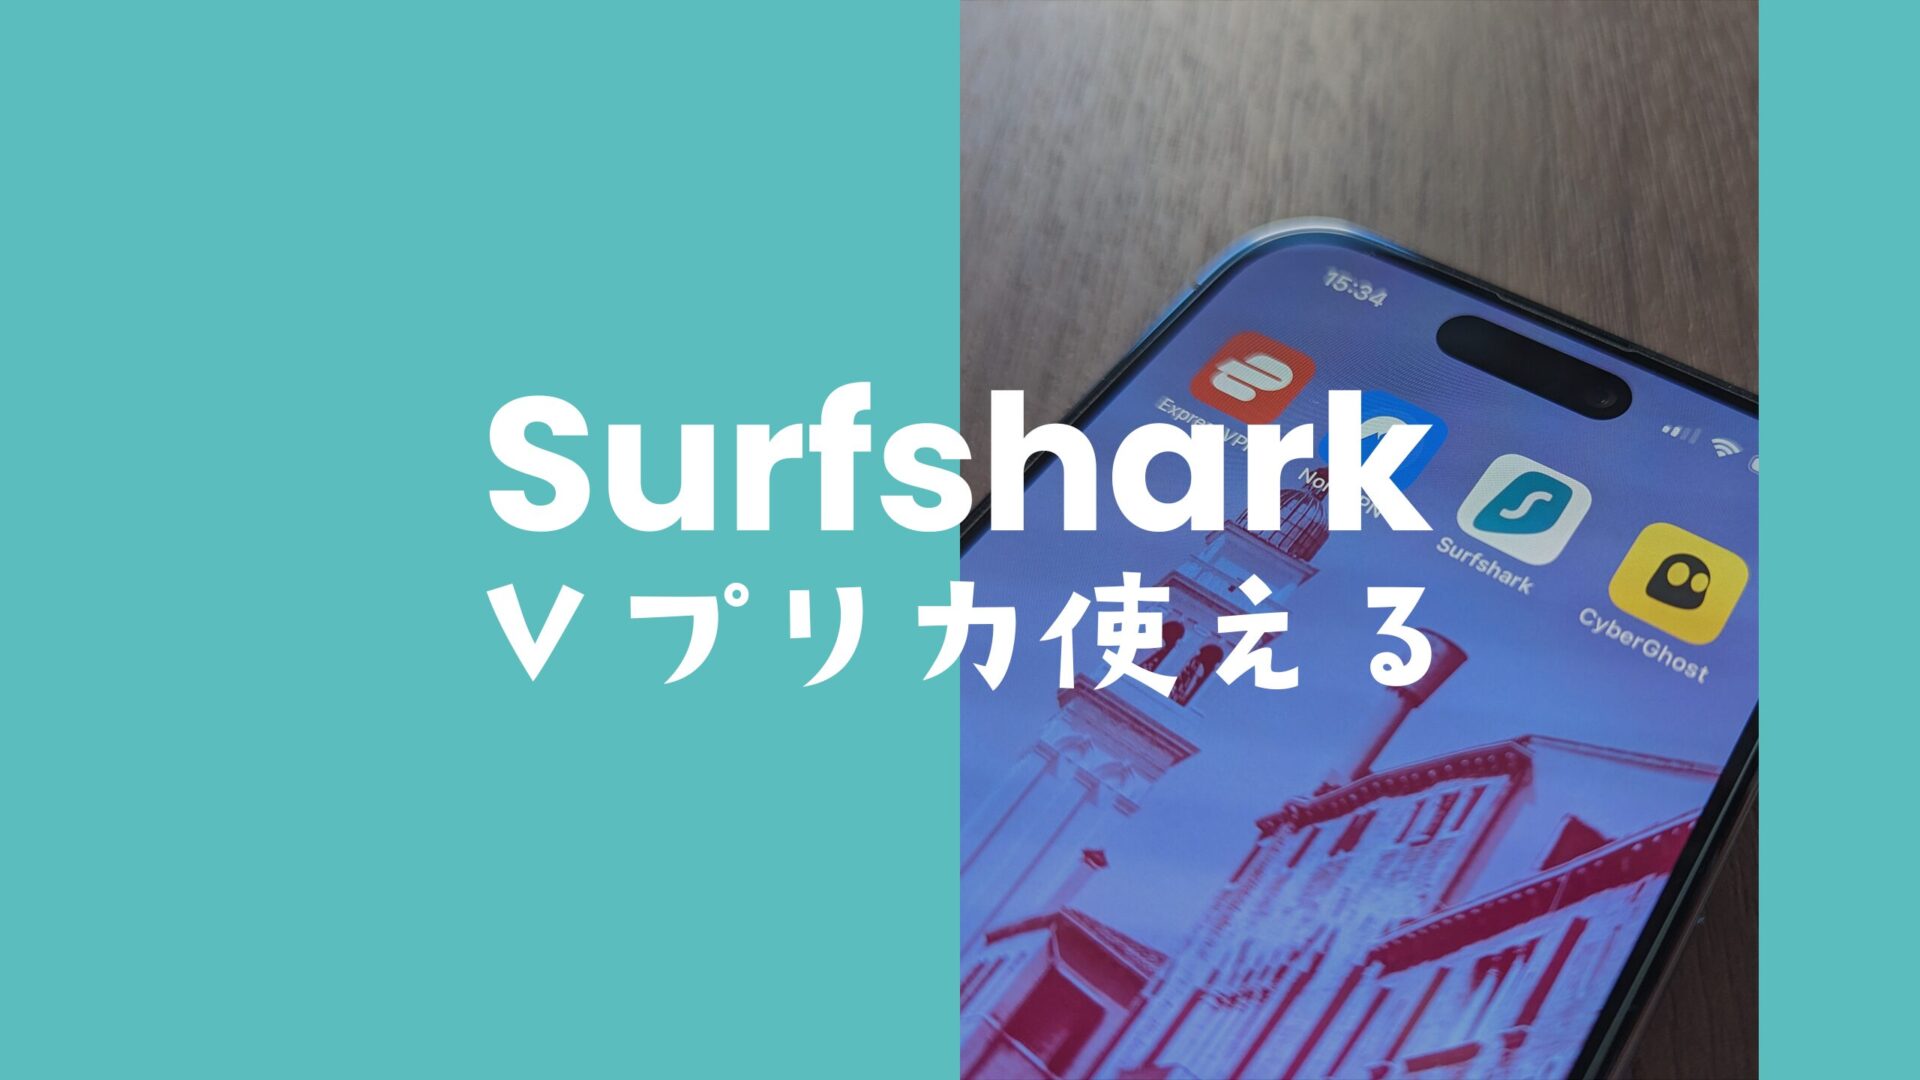 Surfshark VPNをVプリカで支払い&契約する方法を解説。のサムネイル画像